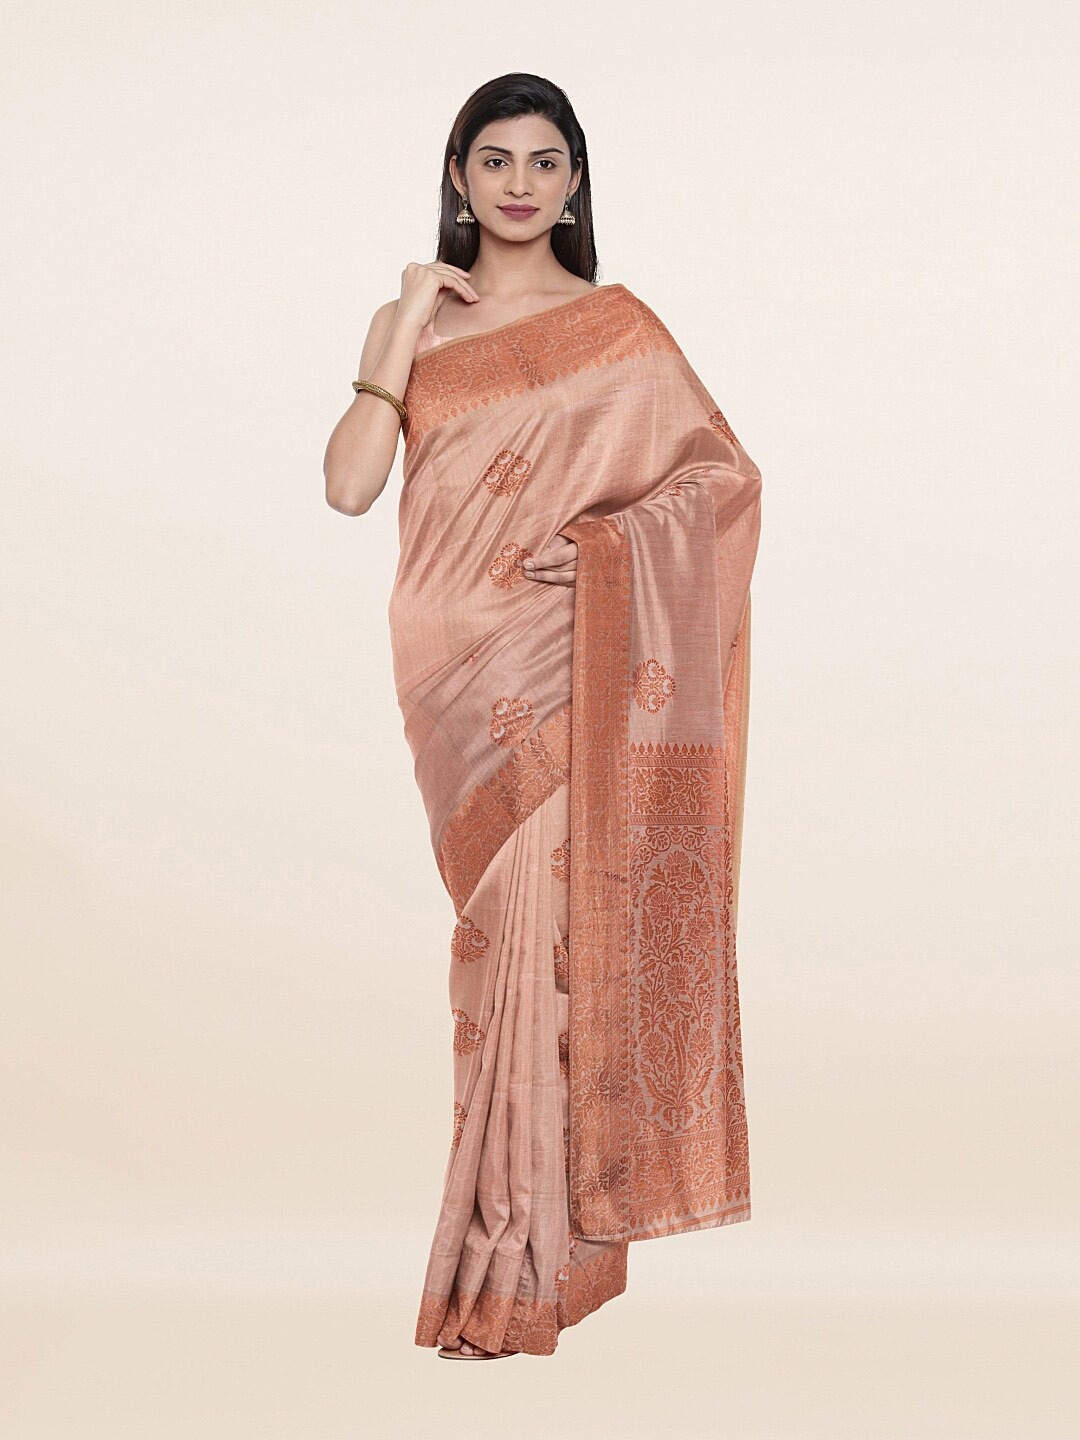 

Pothys Peach-Coloured & Copper-Toned Ethnic Motifs Art Silk Saree